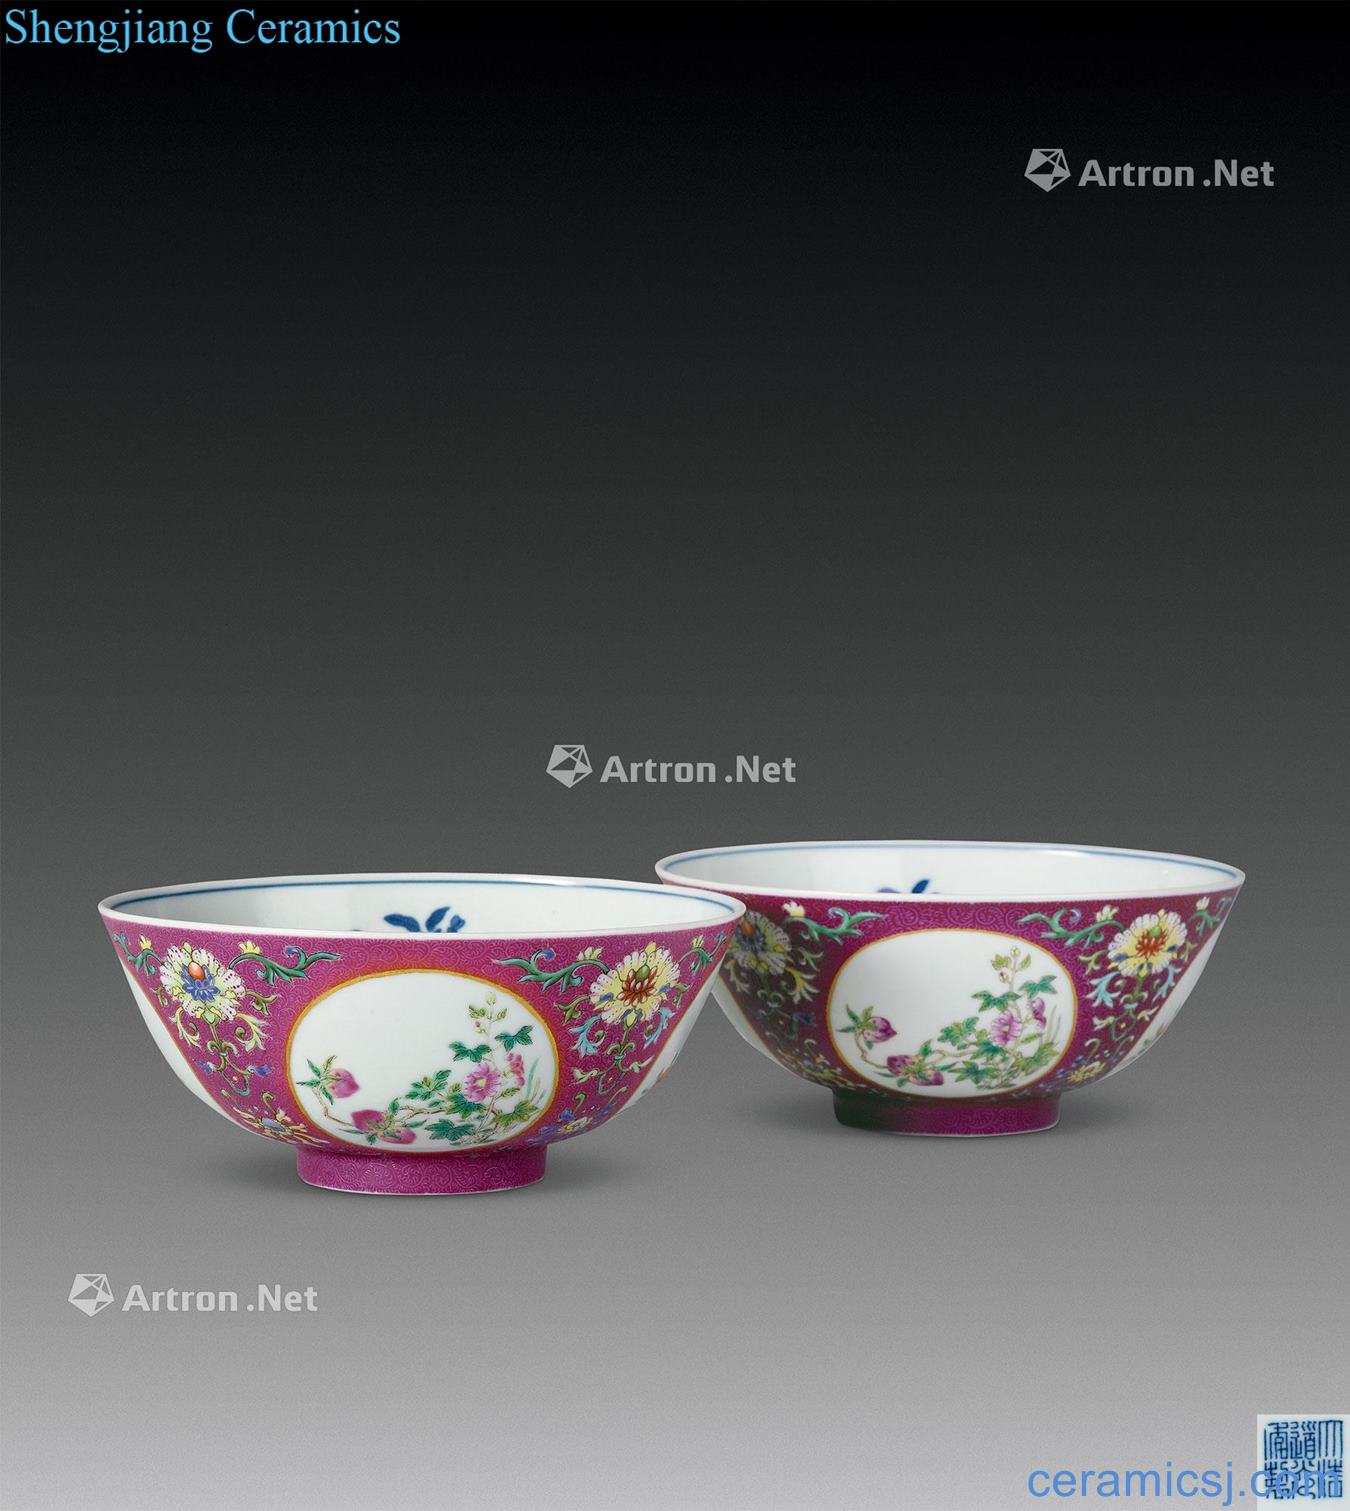 Qing daoguang Rouge purple ground rolling way medallion pastel flowers green-splashed bowls